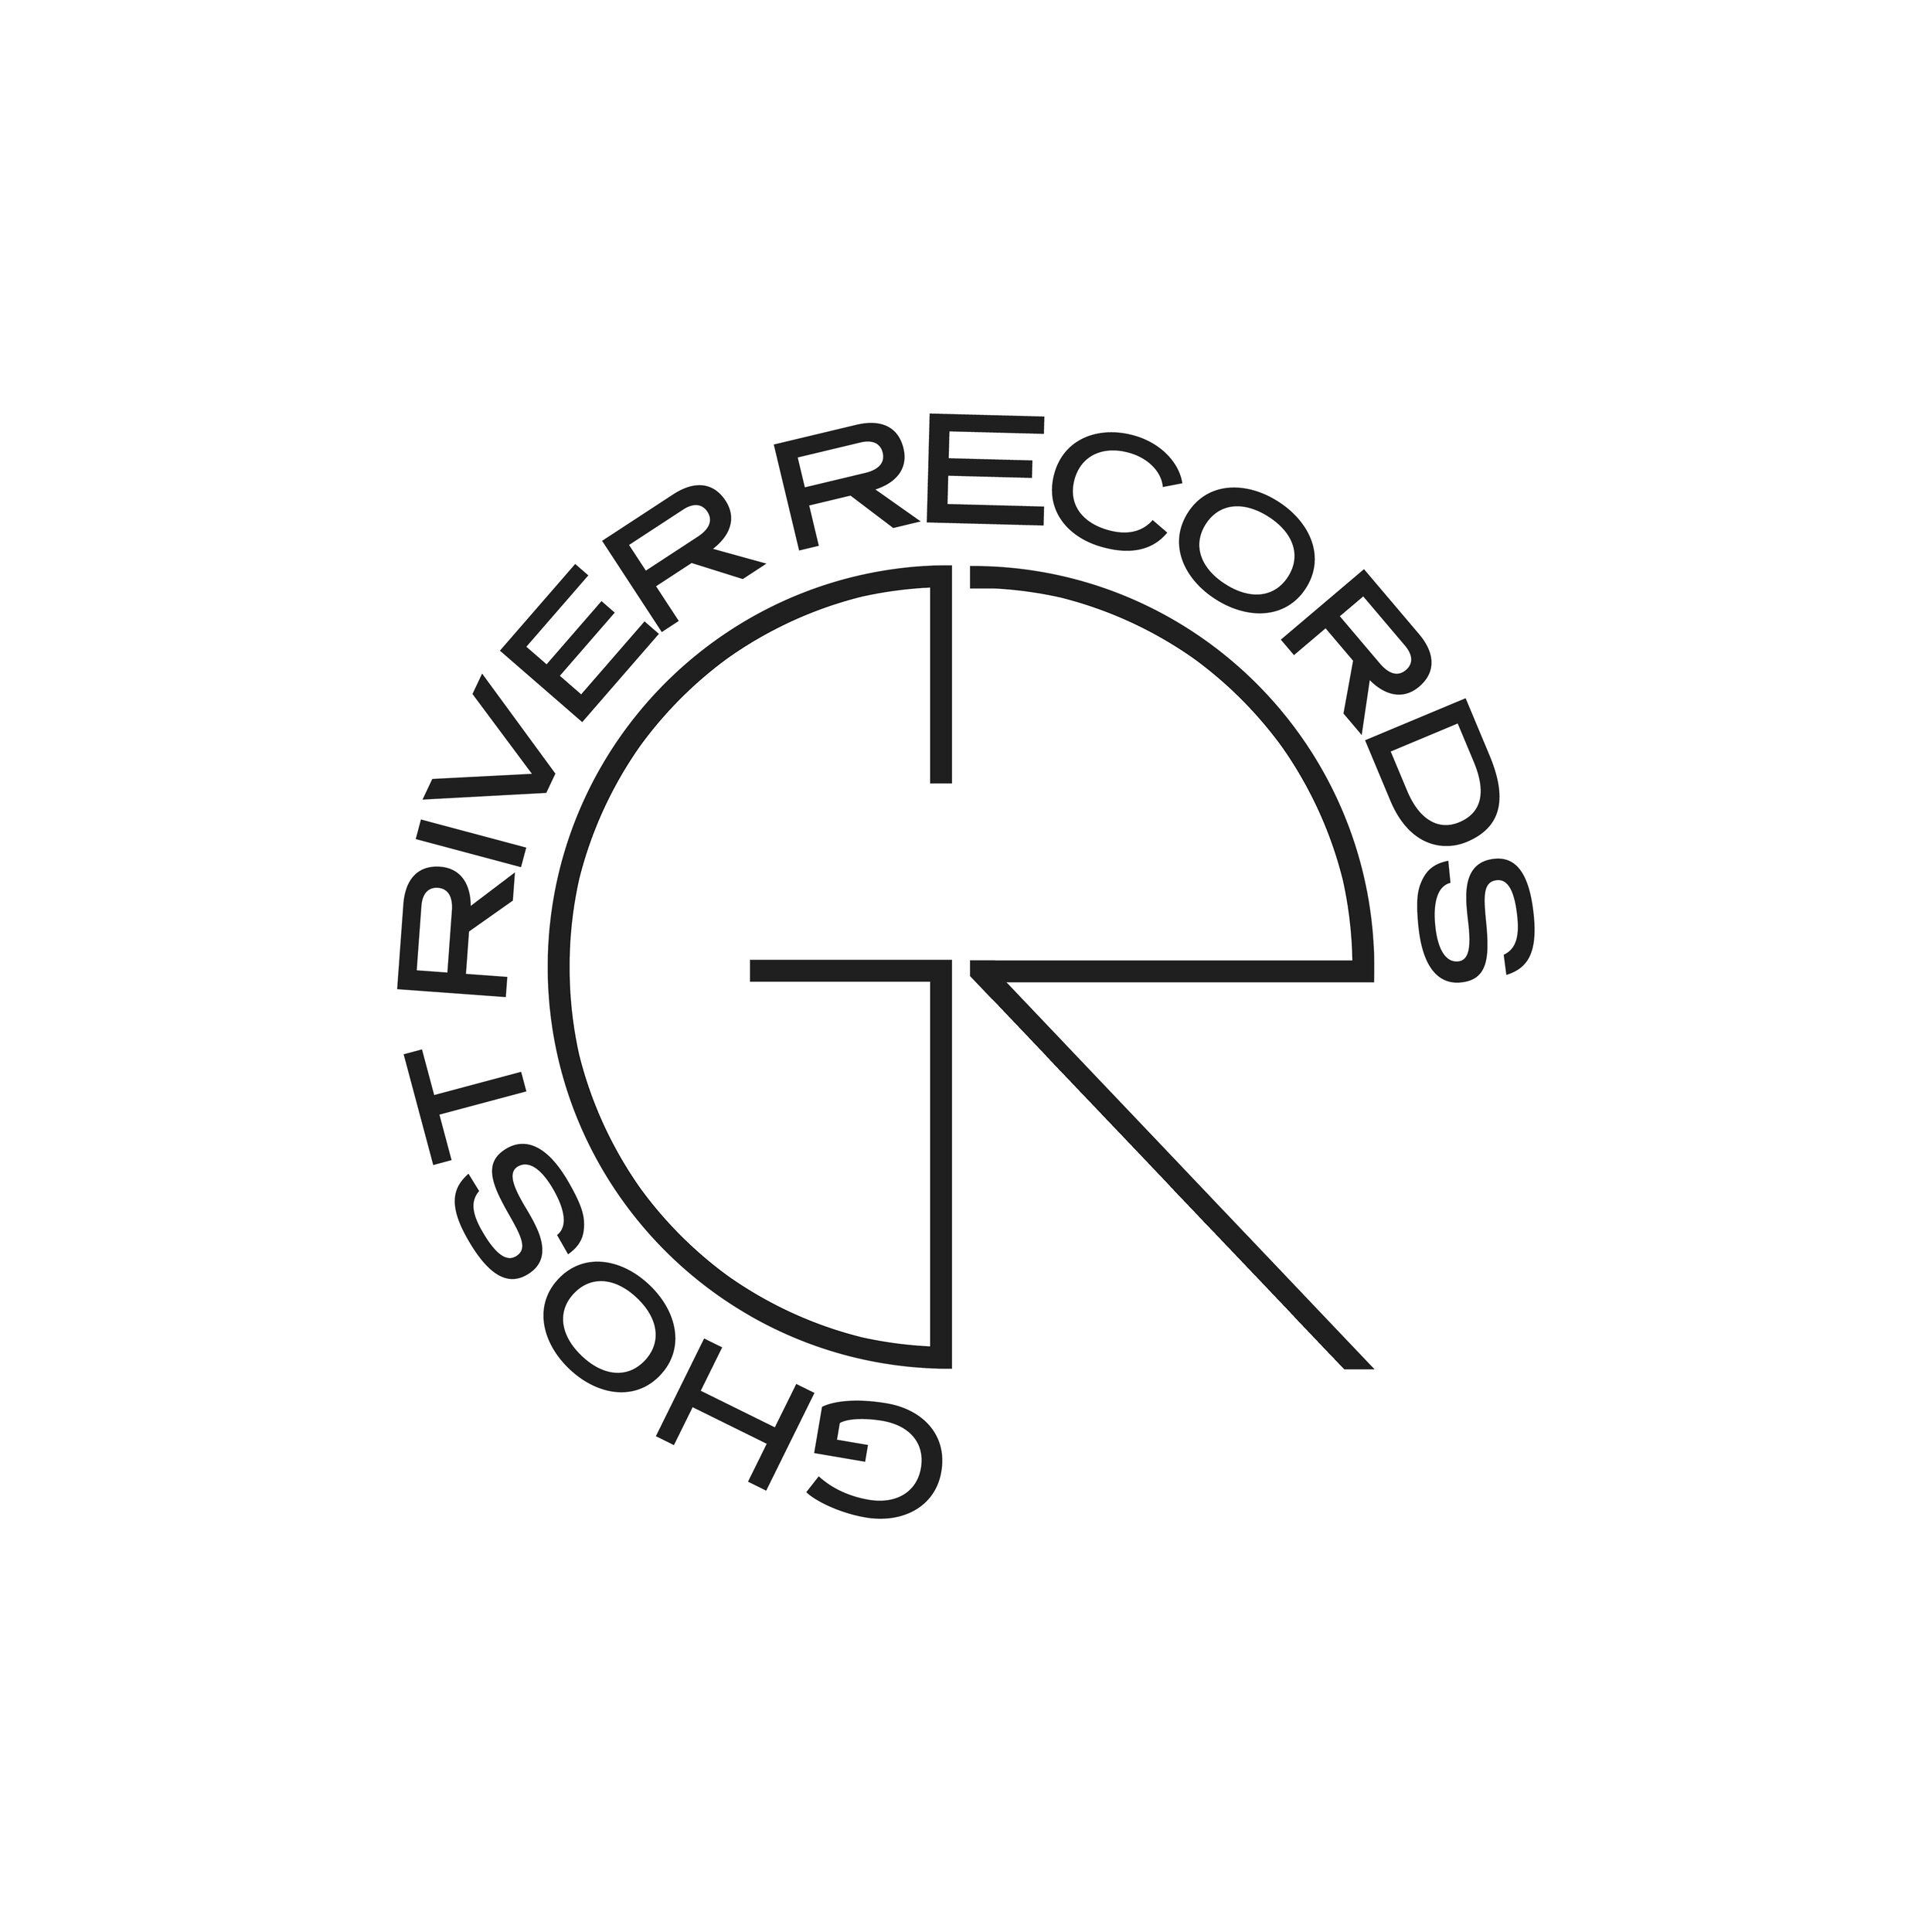 ghost river records logo FINAL text 2 black SOCIAL.jpg